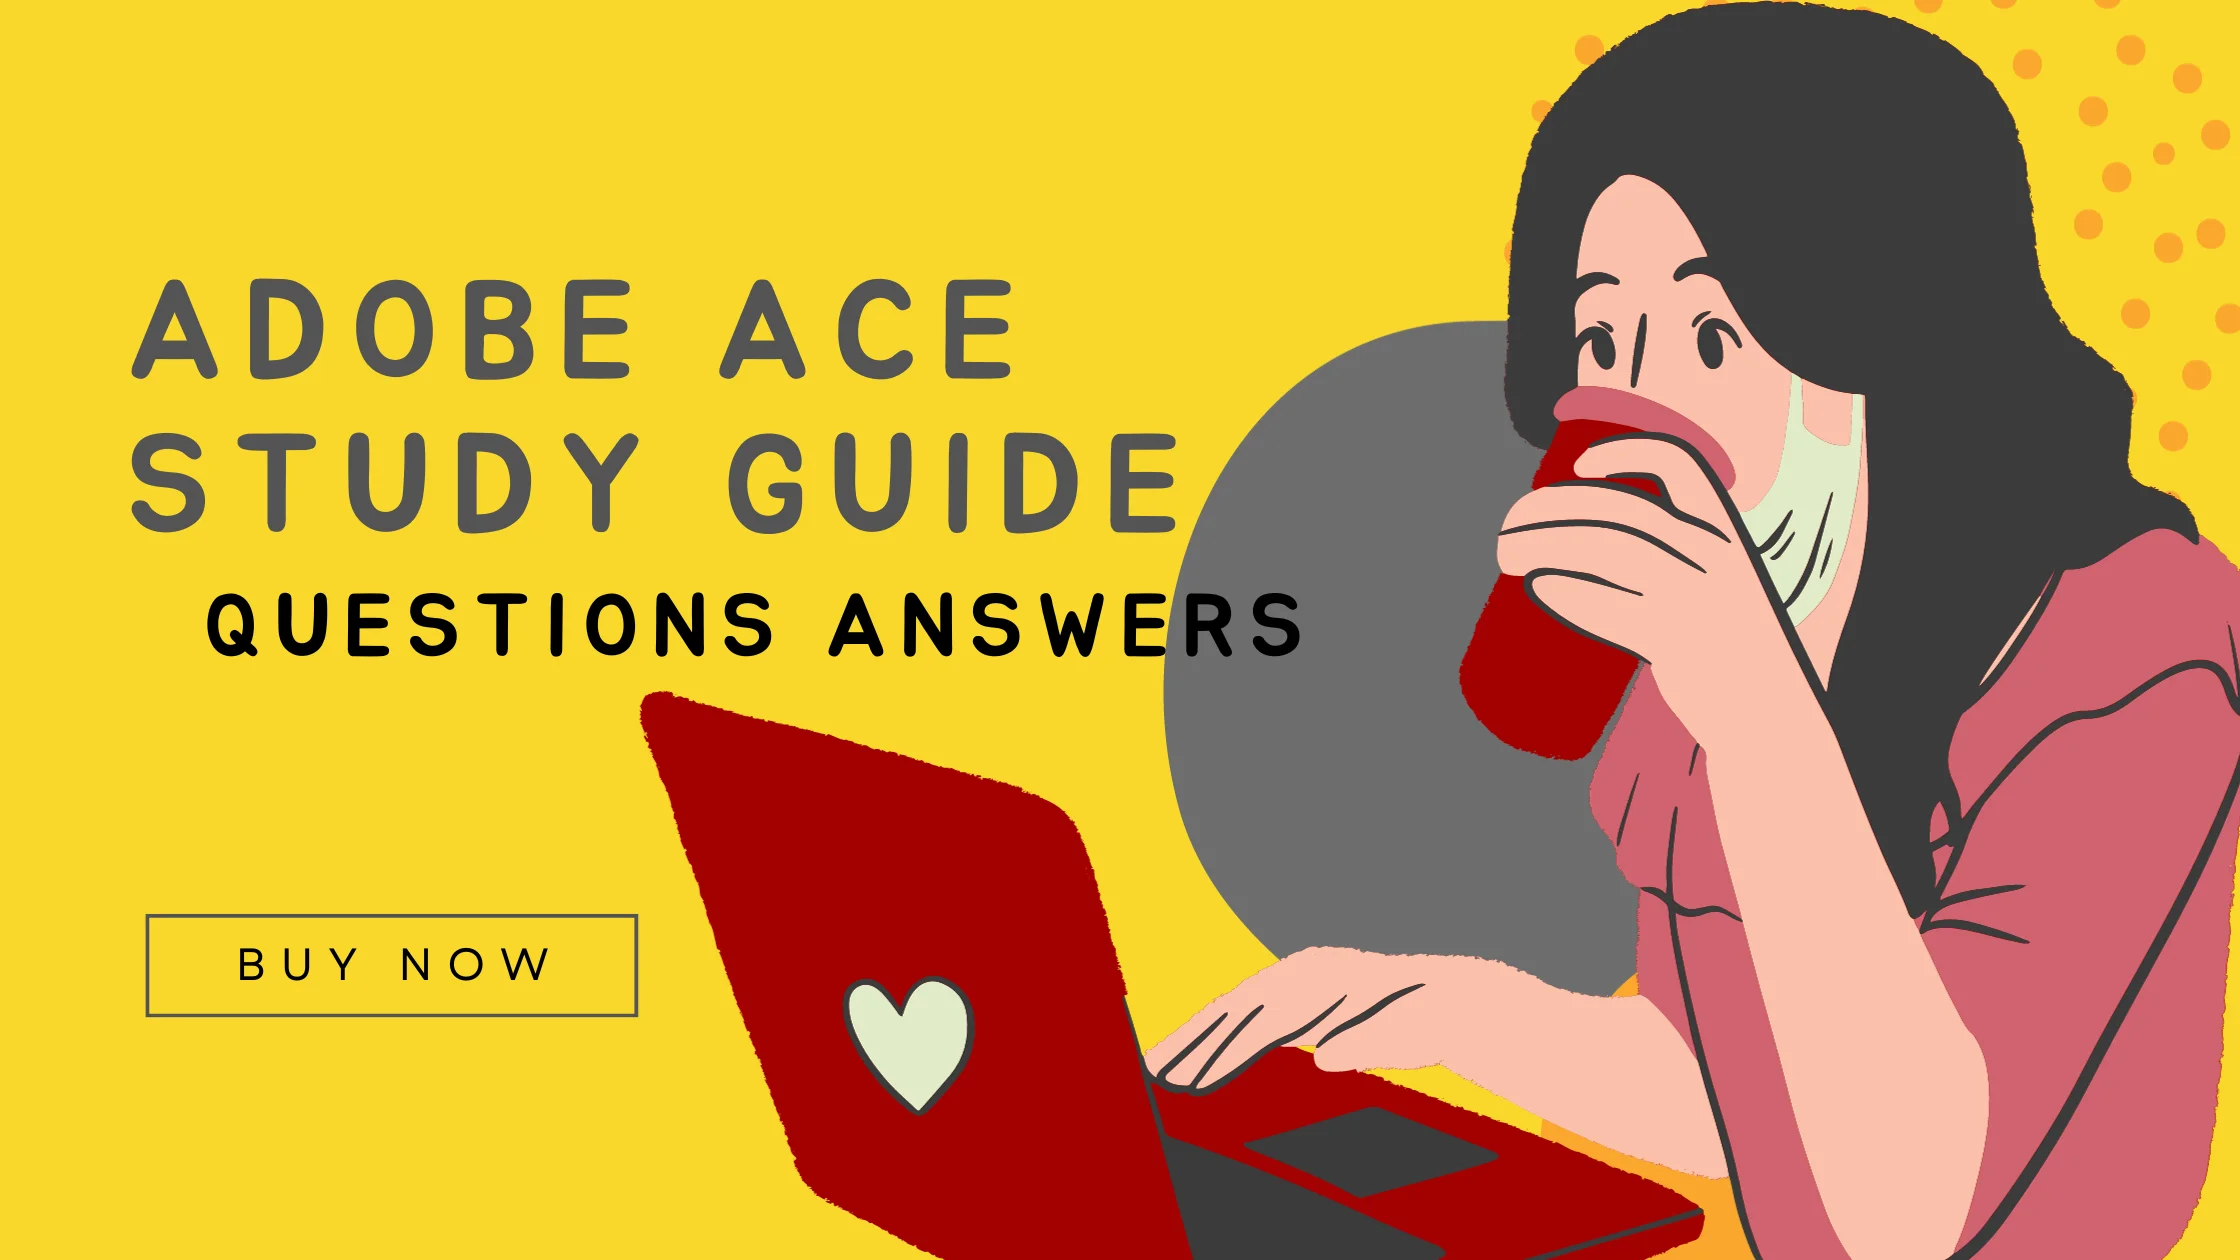 Adobe ACE Study Guide promotion